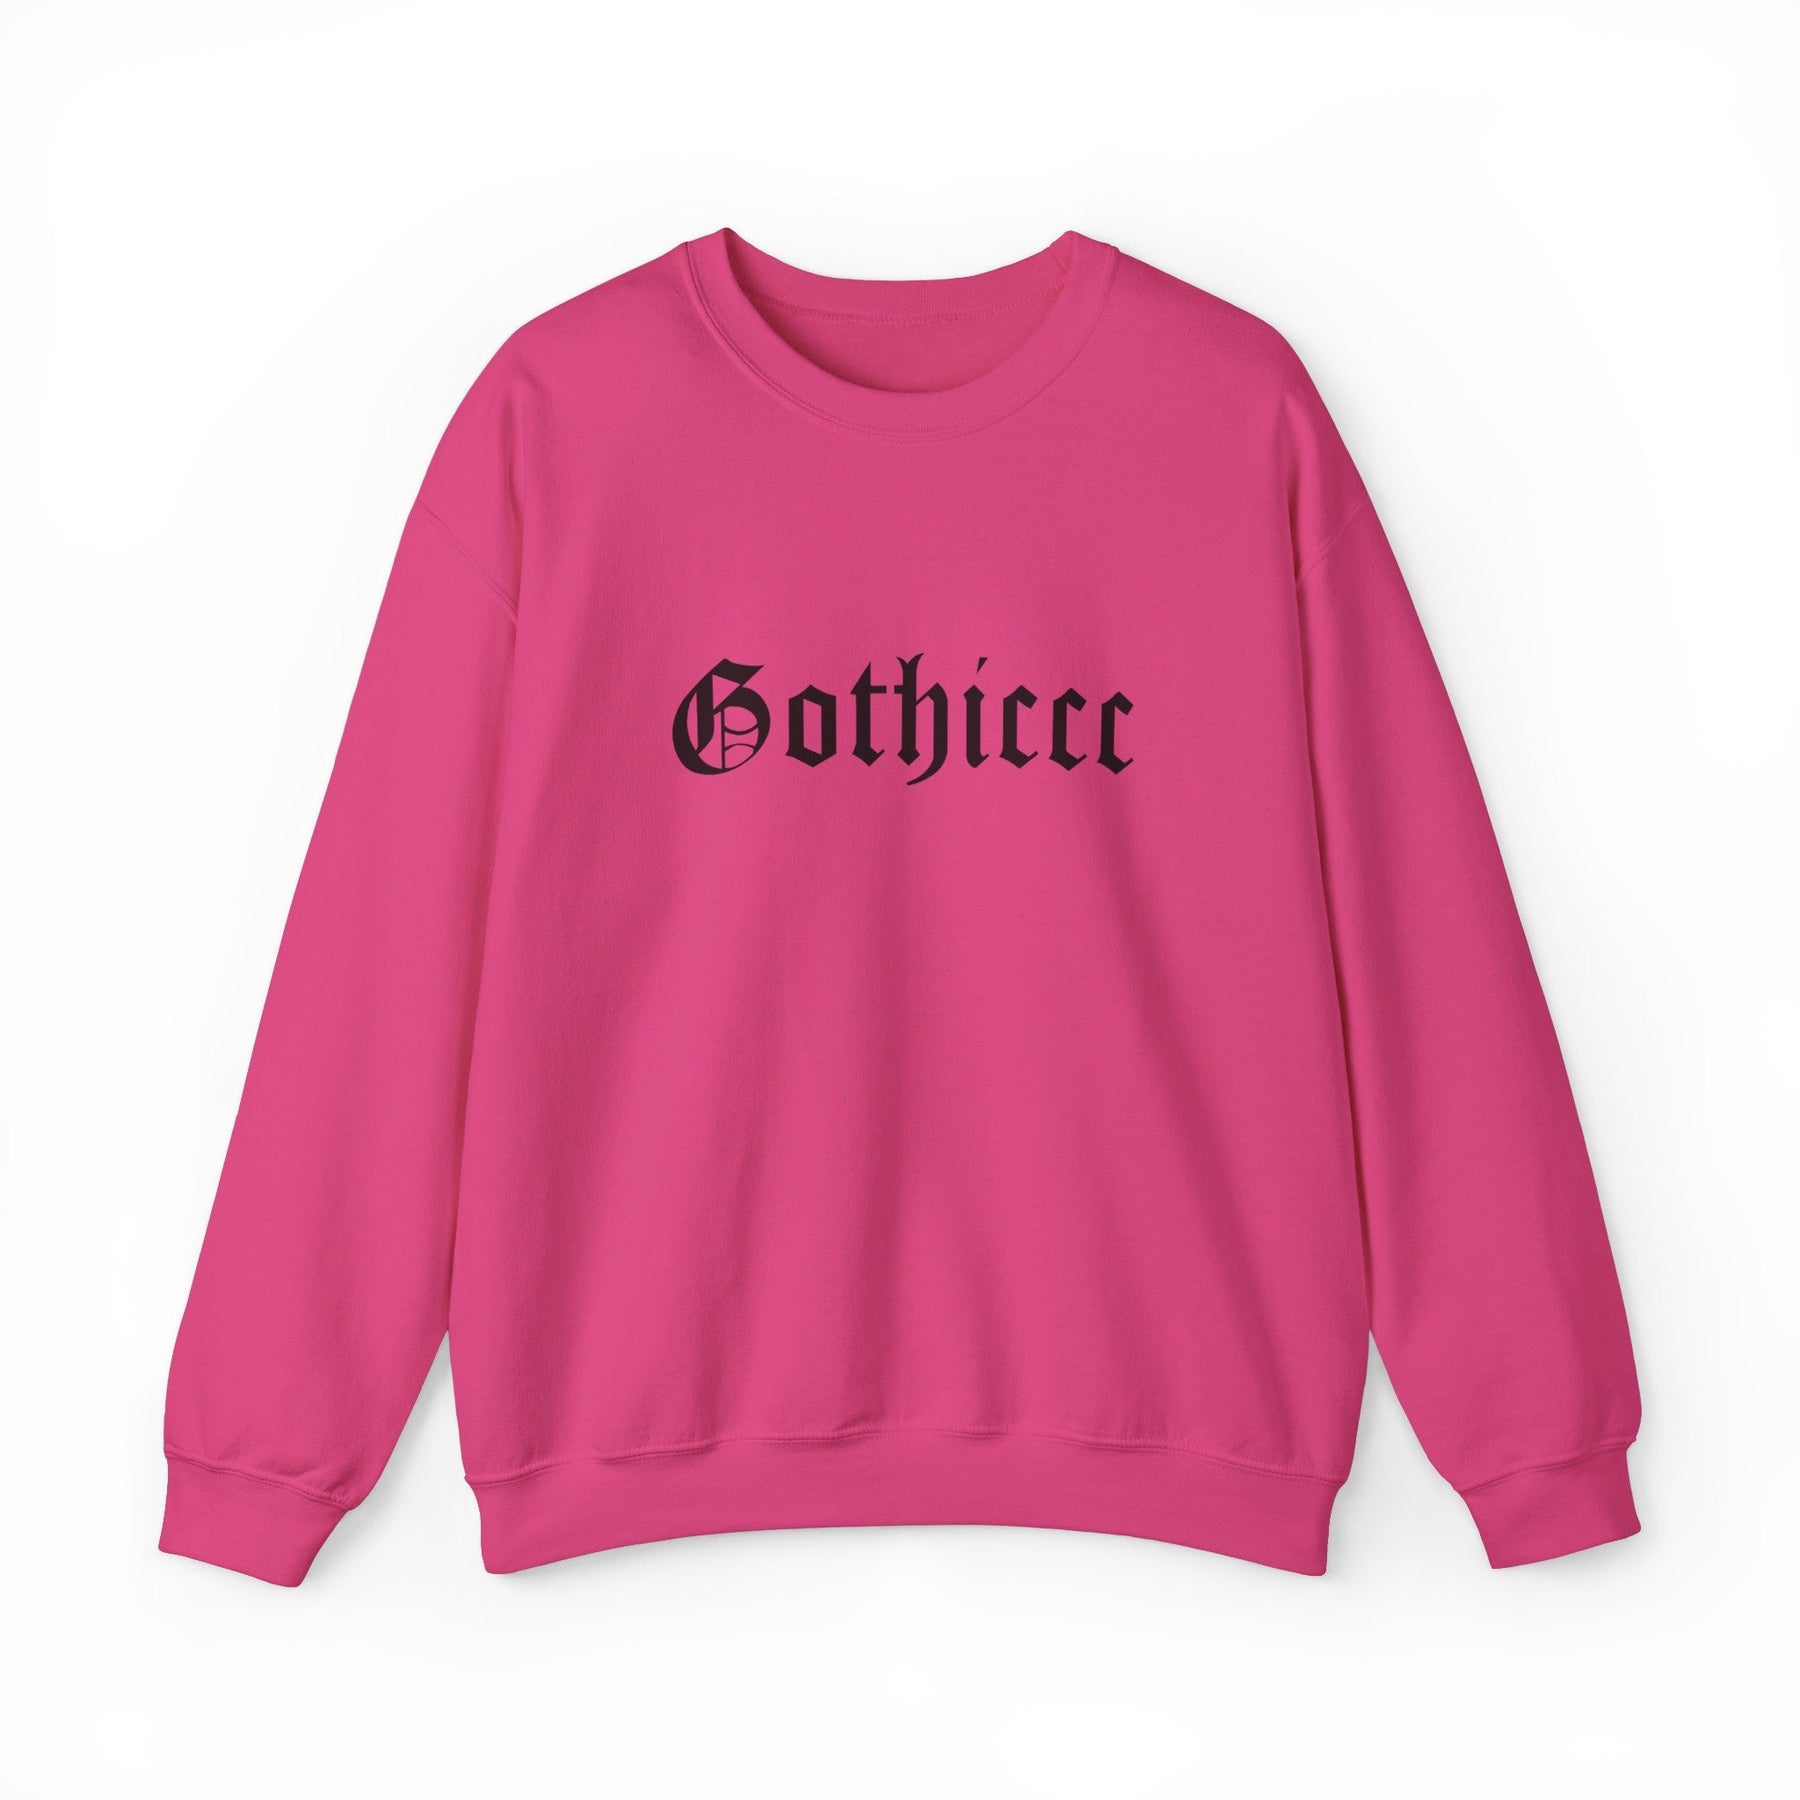 Gothiccc Long Sleeve Crew Neck Sweatshirt - Goth Cloth Co.Sweatshirt24904532539822792382